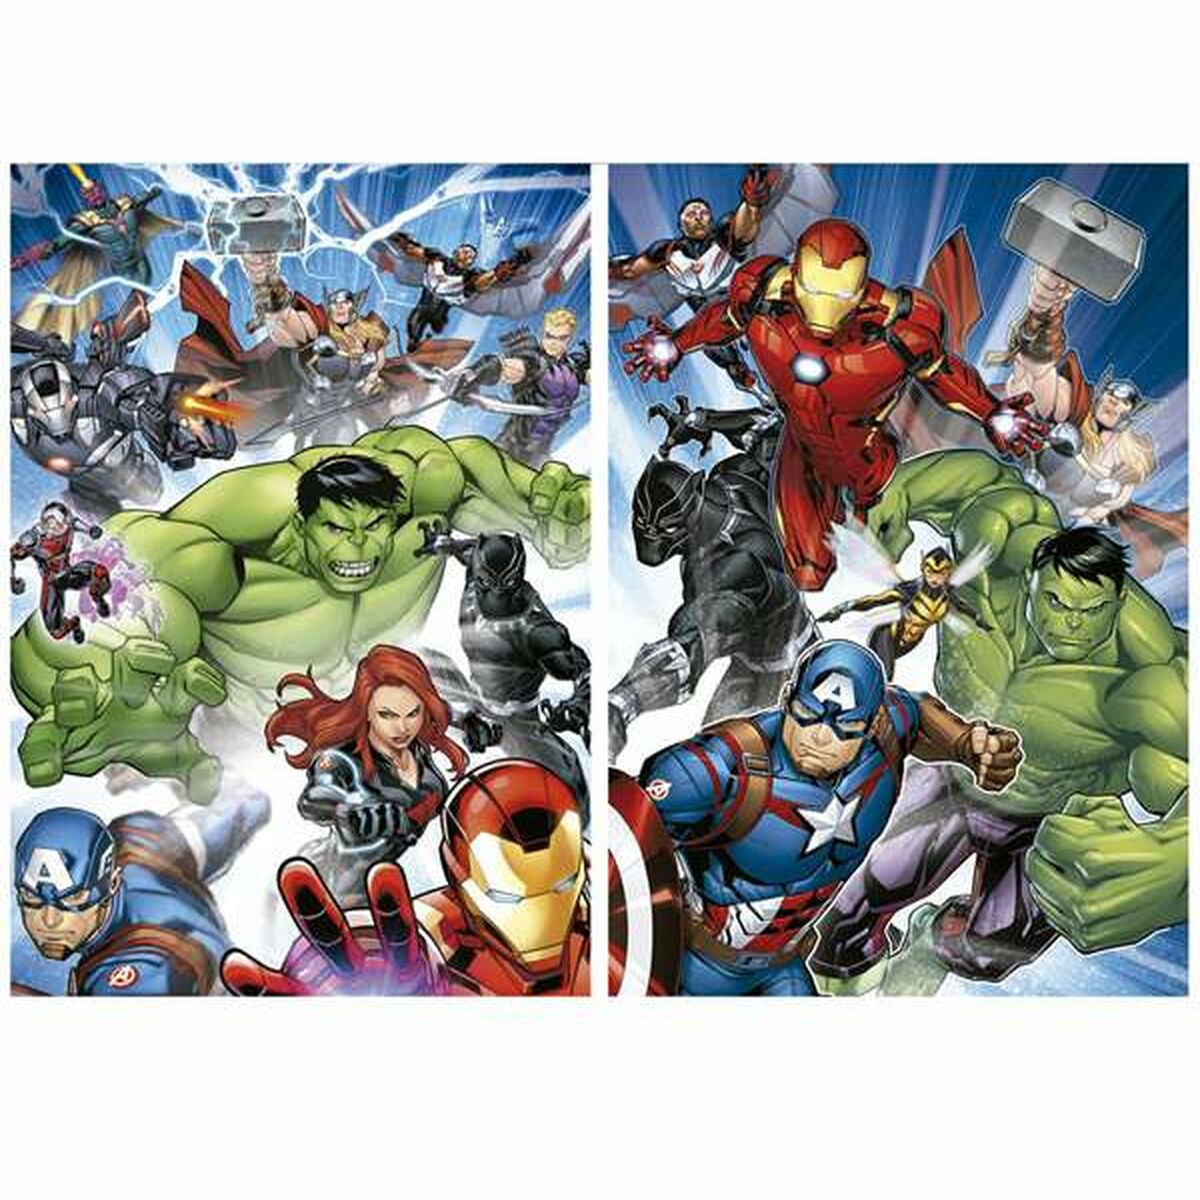 Set 2 pussel The Avengers 100 Delar-Leksaker och spel, Pussel och hjärngrupper-The Avengers-peaceofhome.se